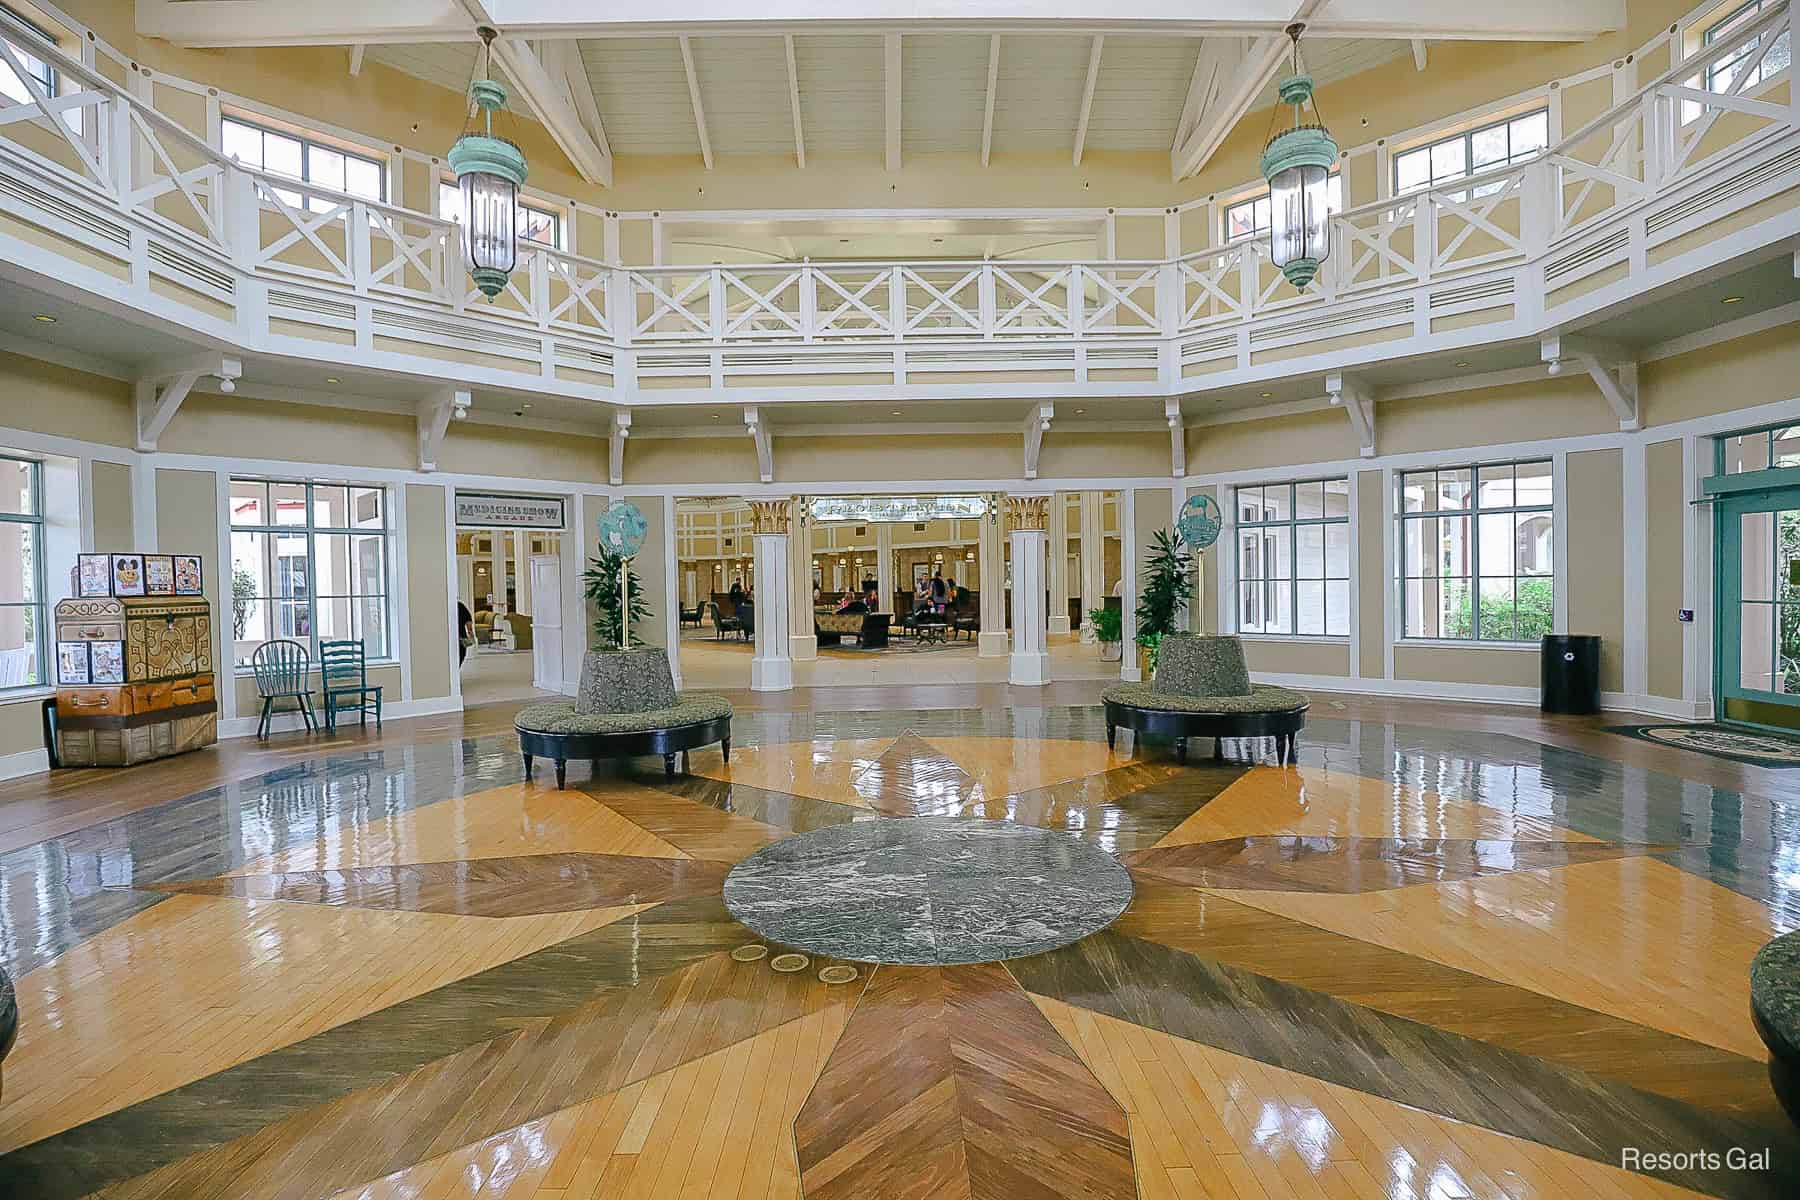 the lobby of Port Orleans Riverside